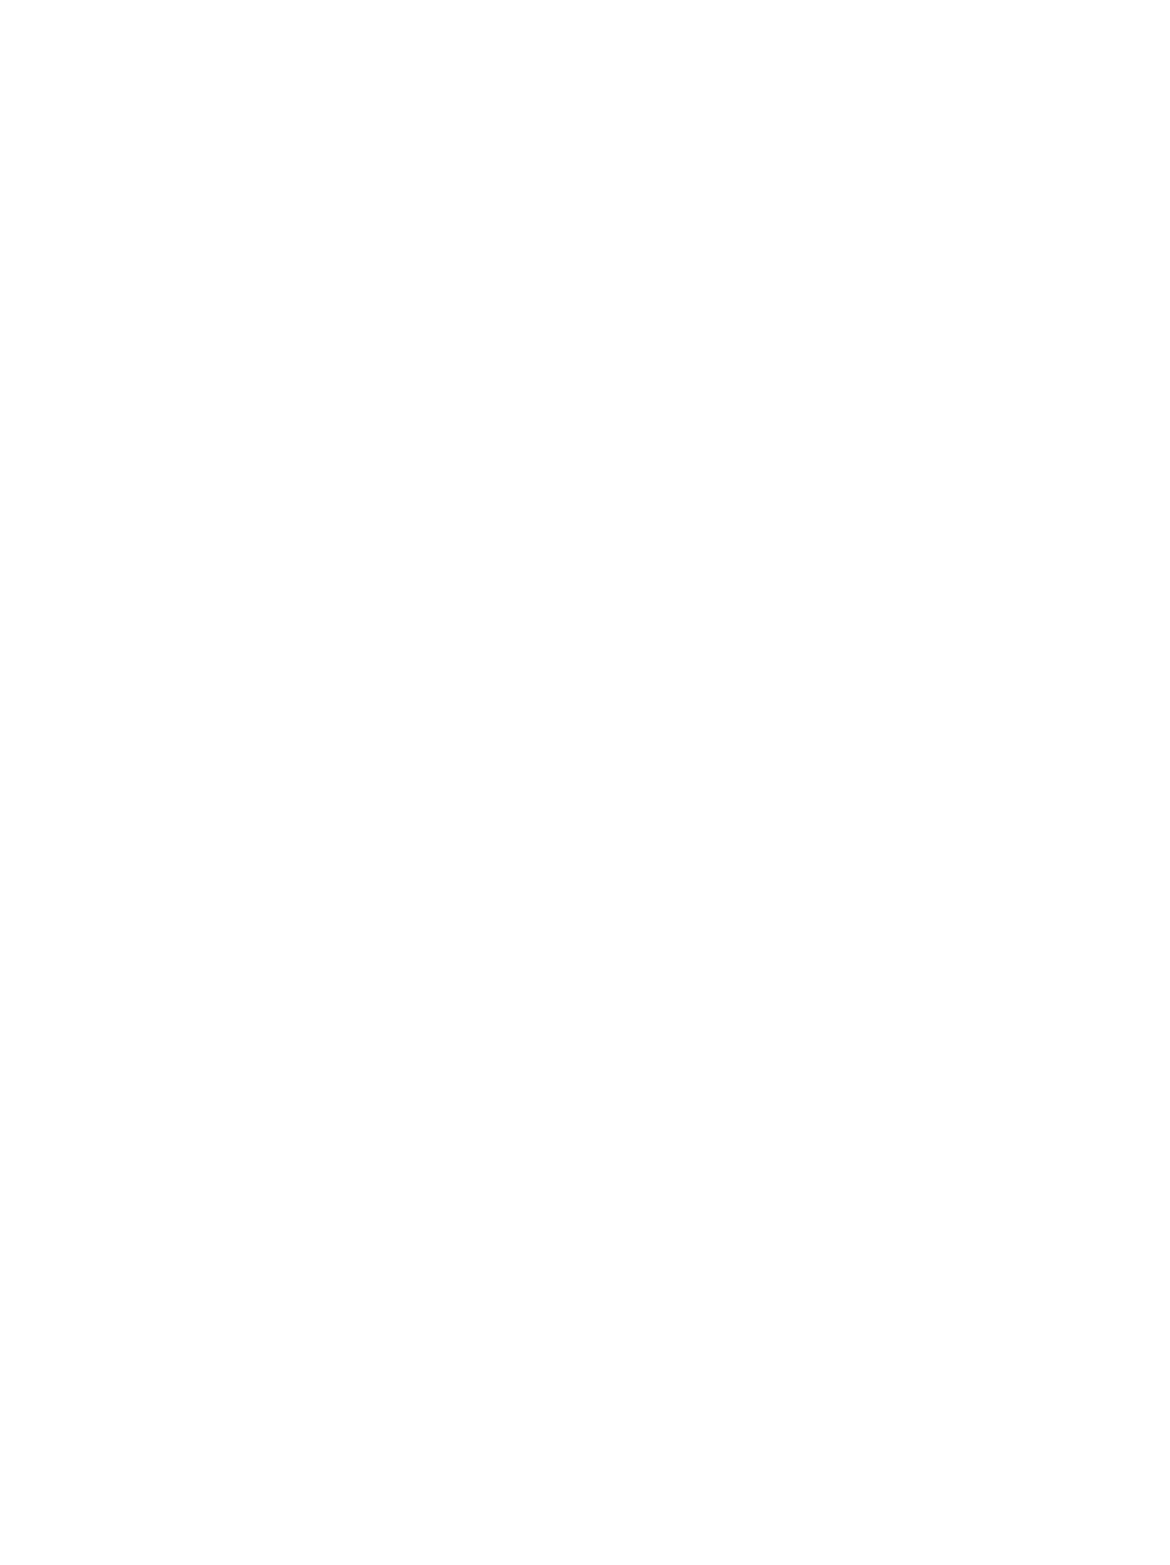 Pennon Group logo for dark backgrounds (transparent PNG)